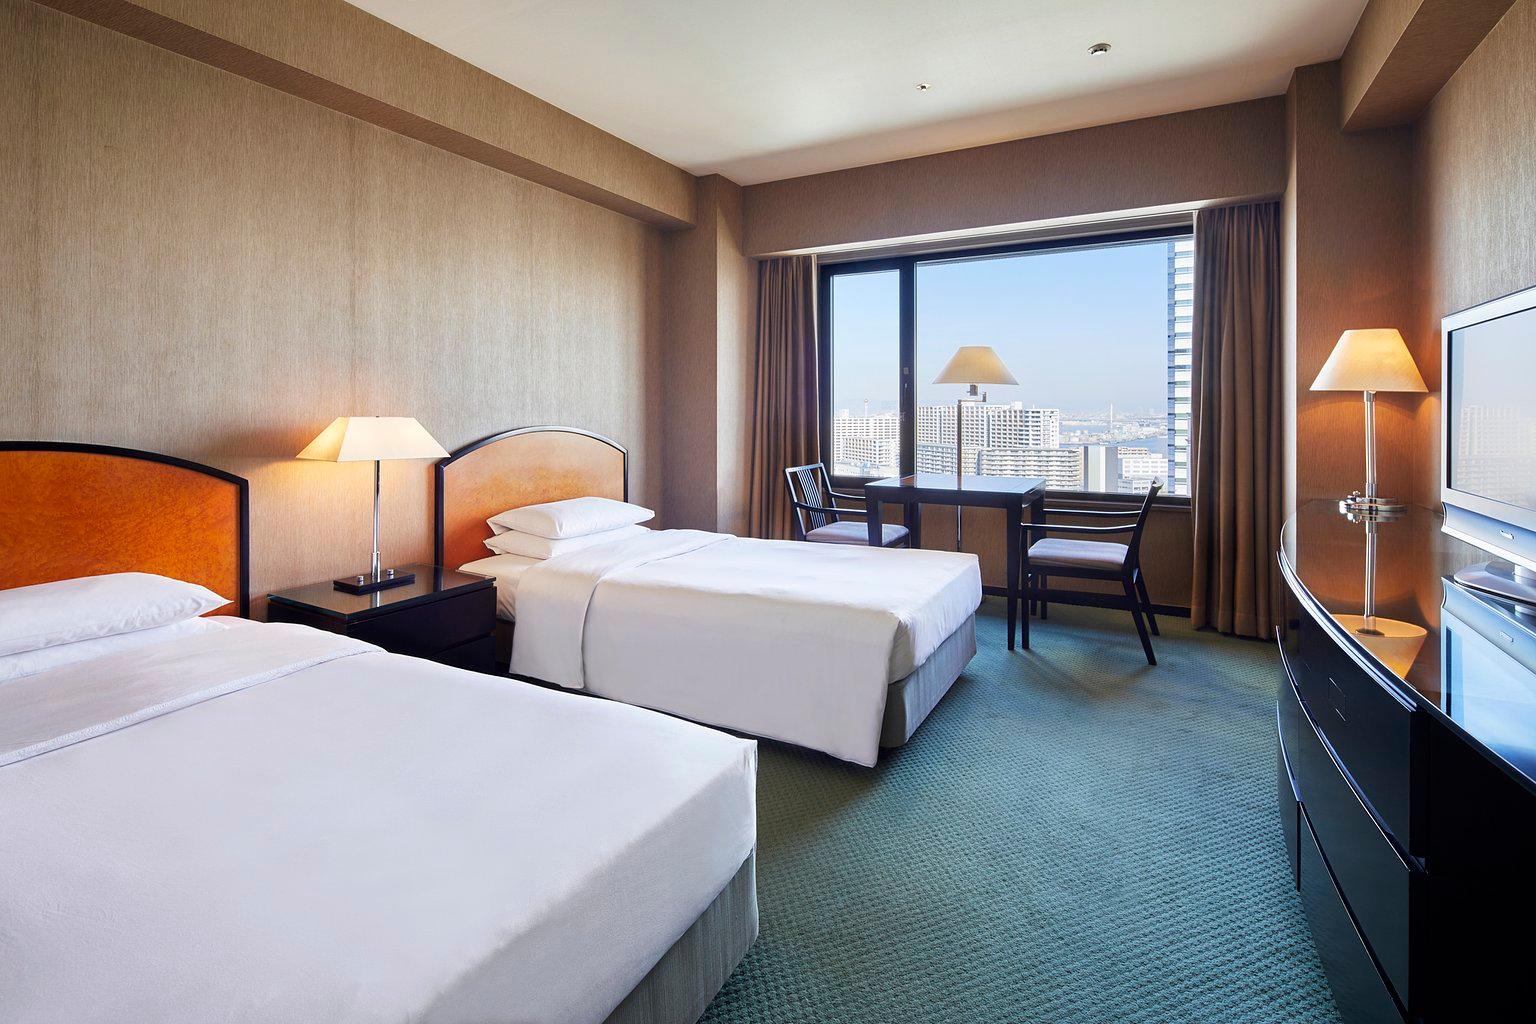 Twin room - grand prince hotel osaka bay